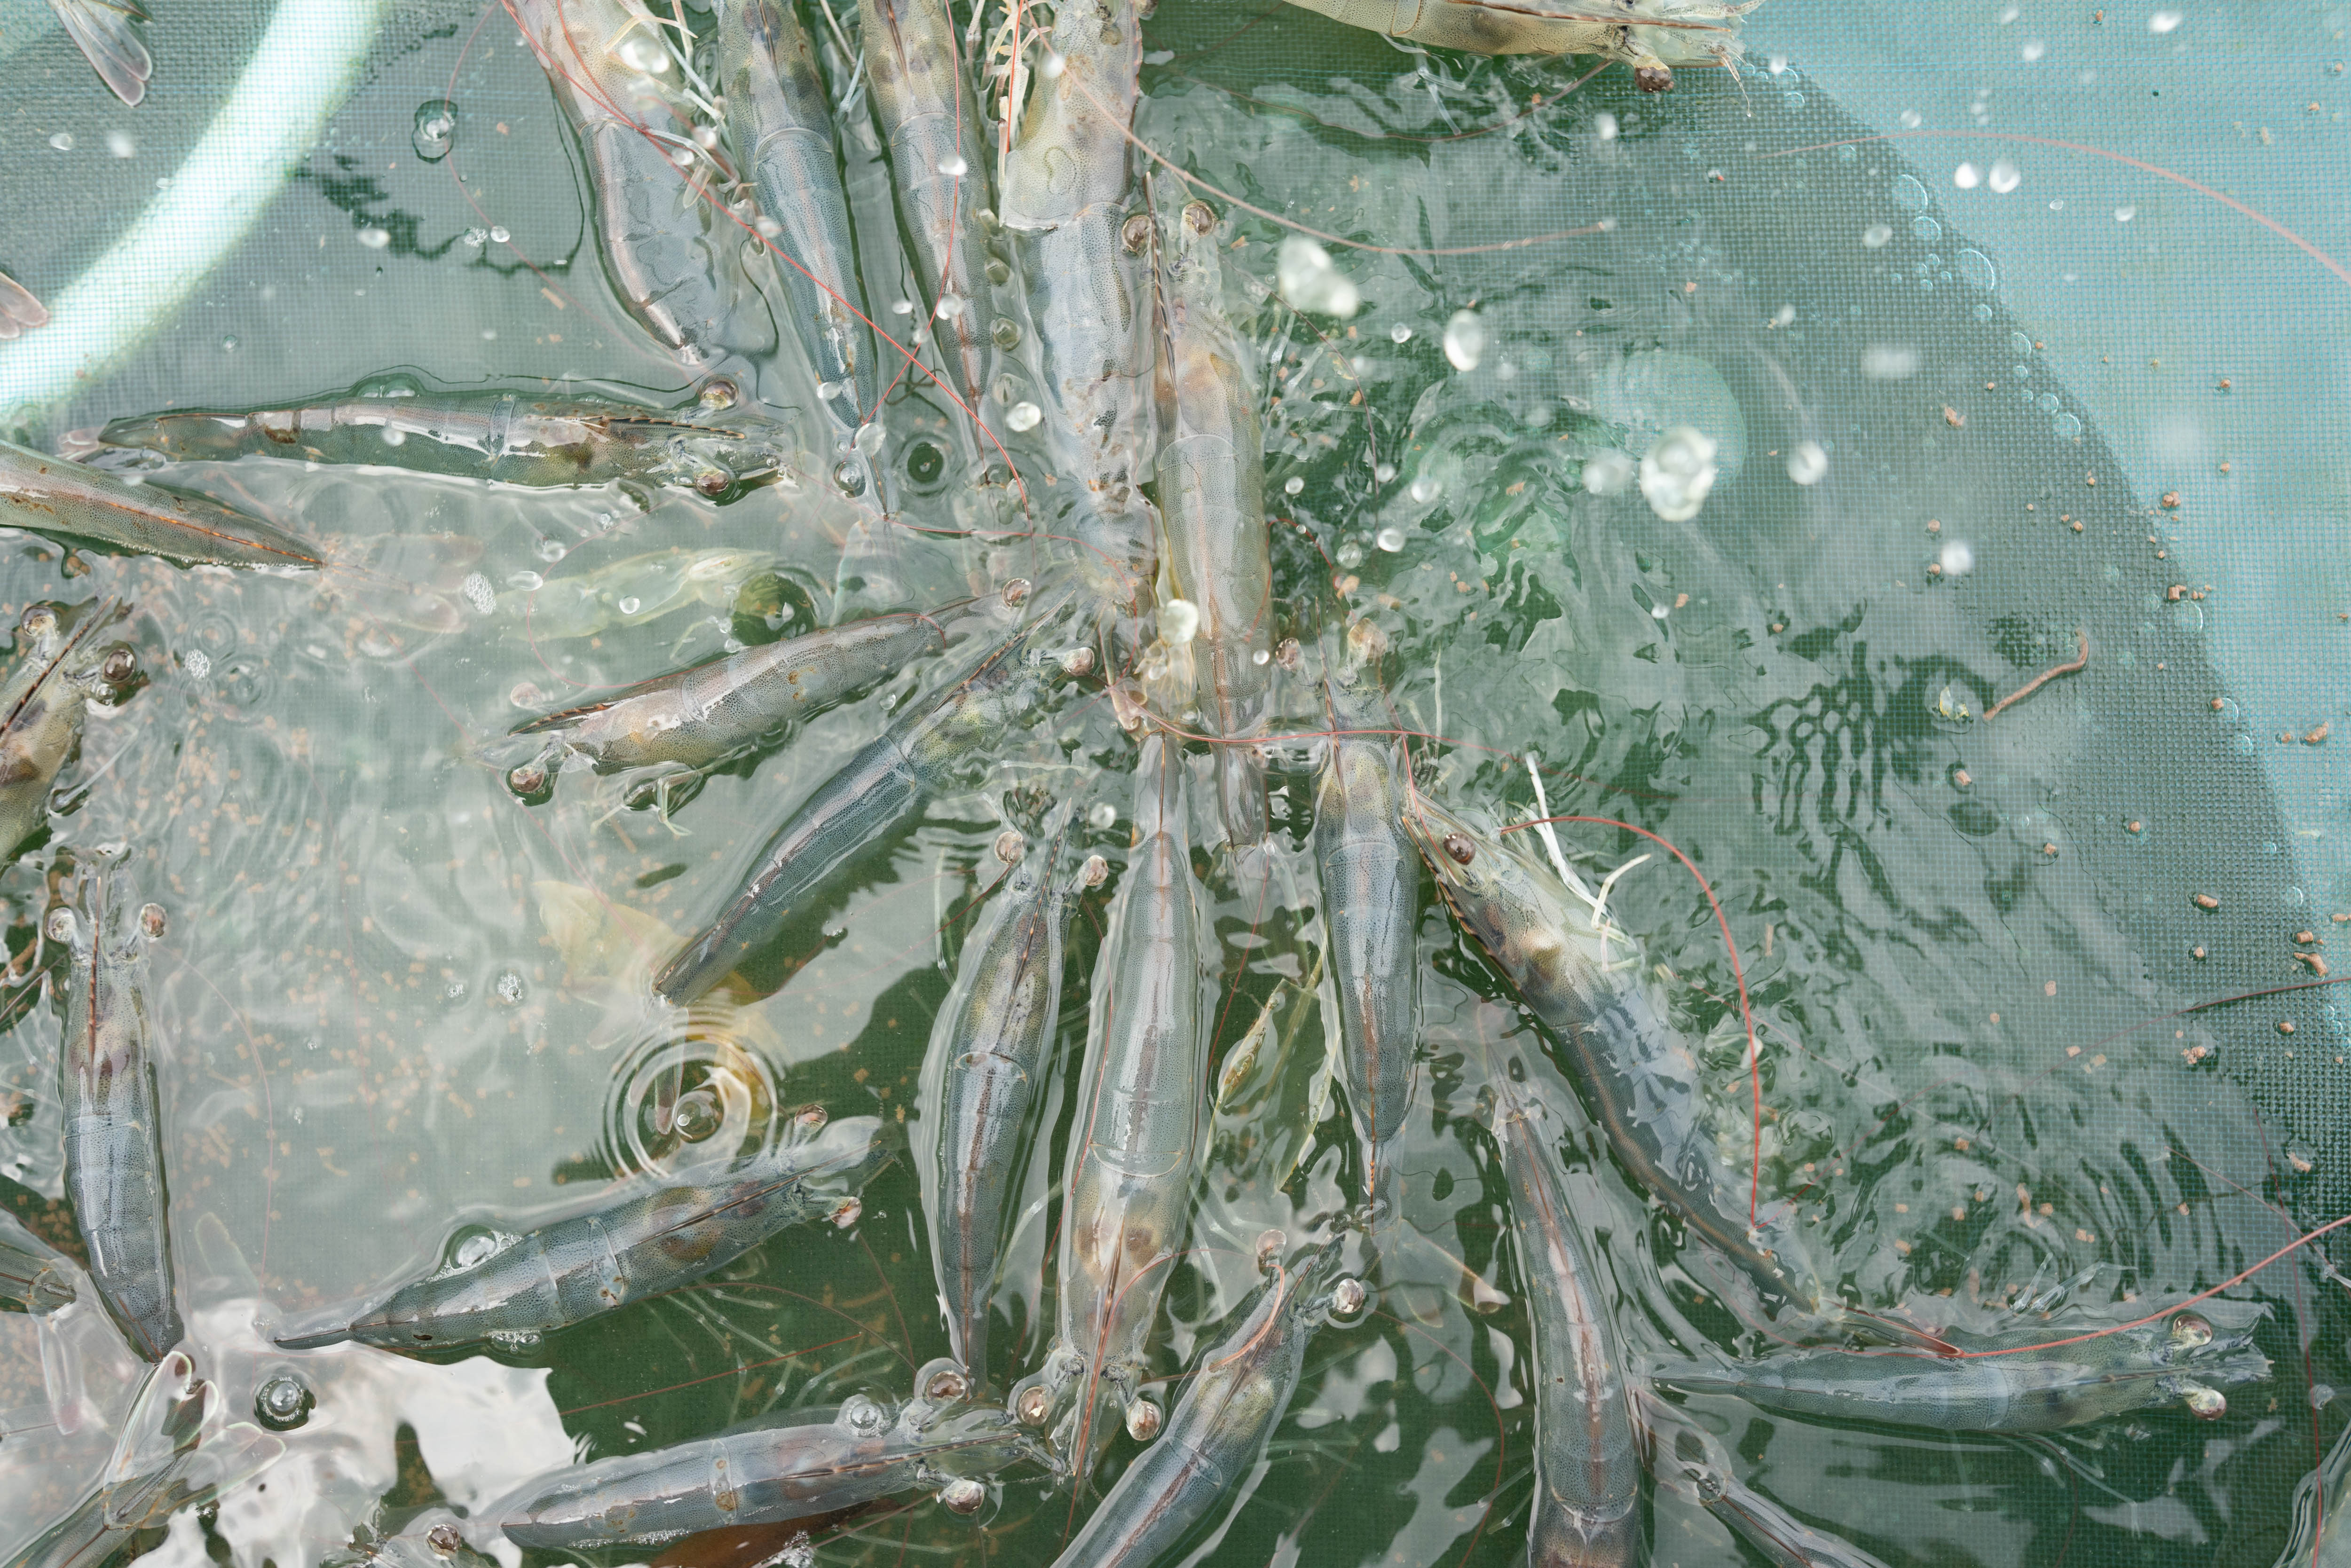 Shrimp cocktail—An intricate ecosystem